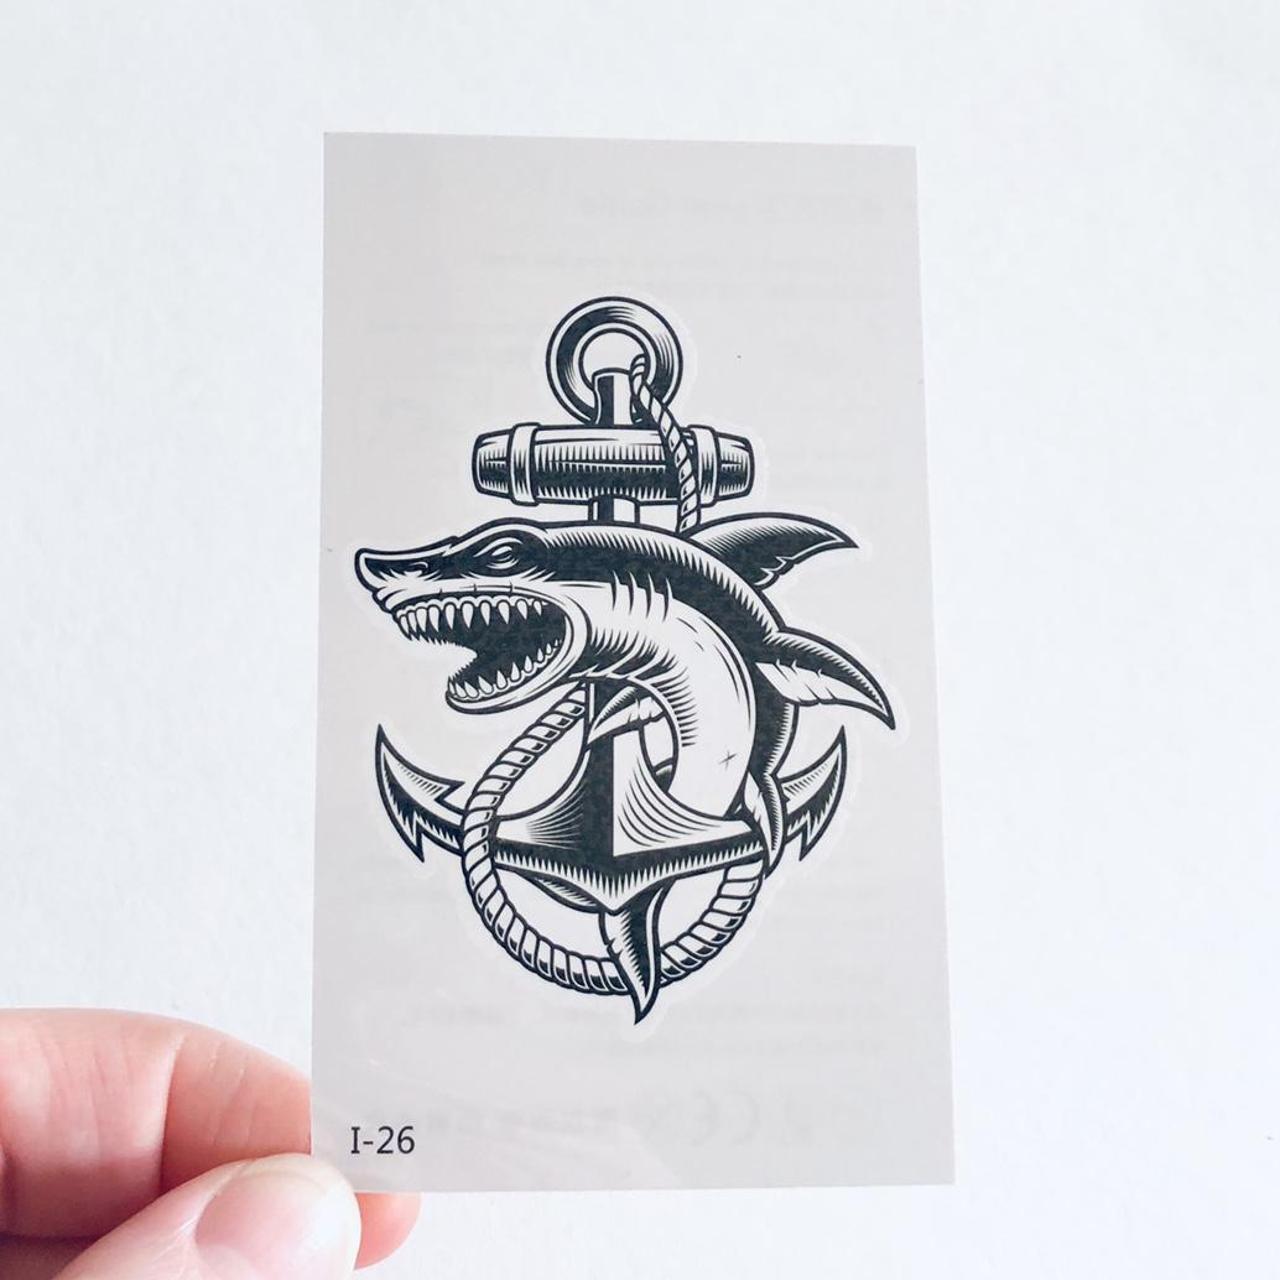 33+ Anchor With Chain Tattoos Ideas